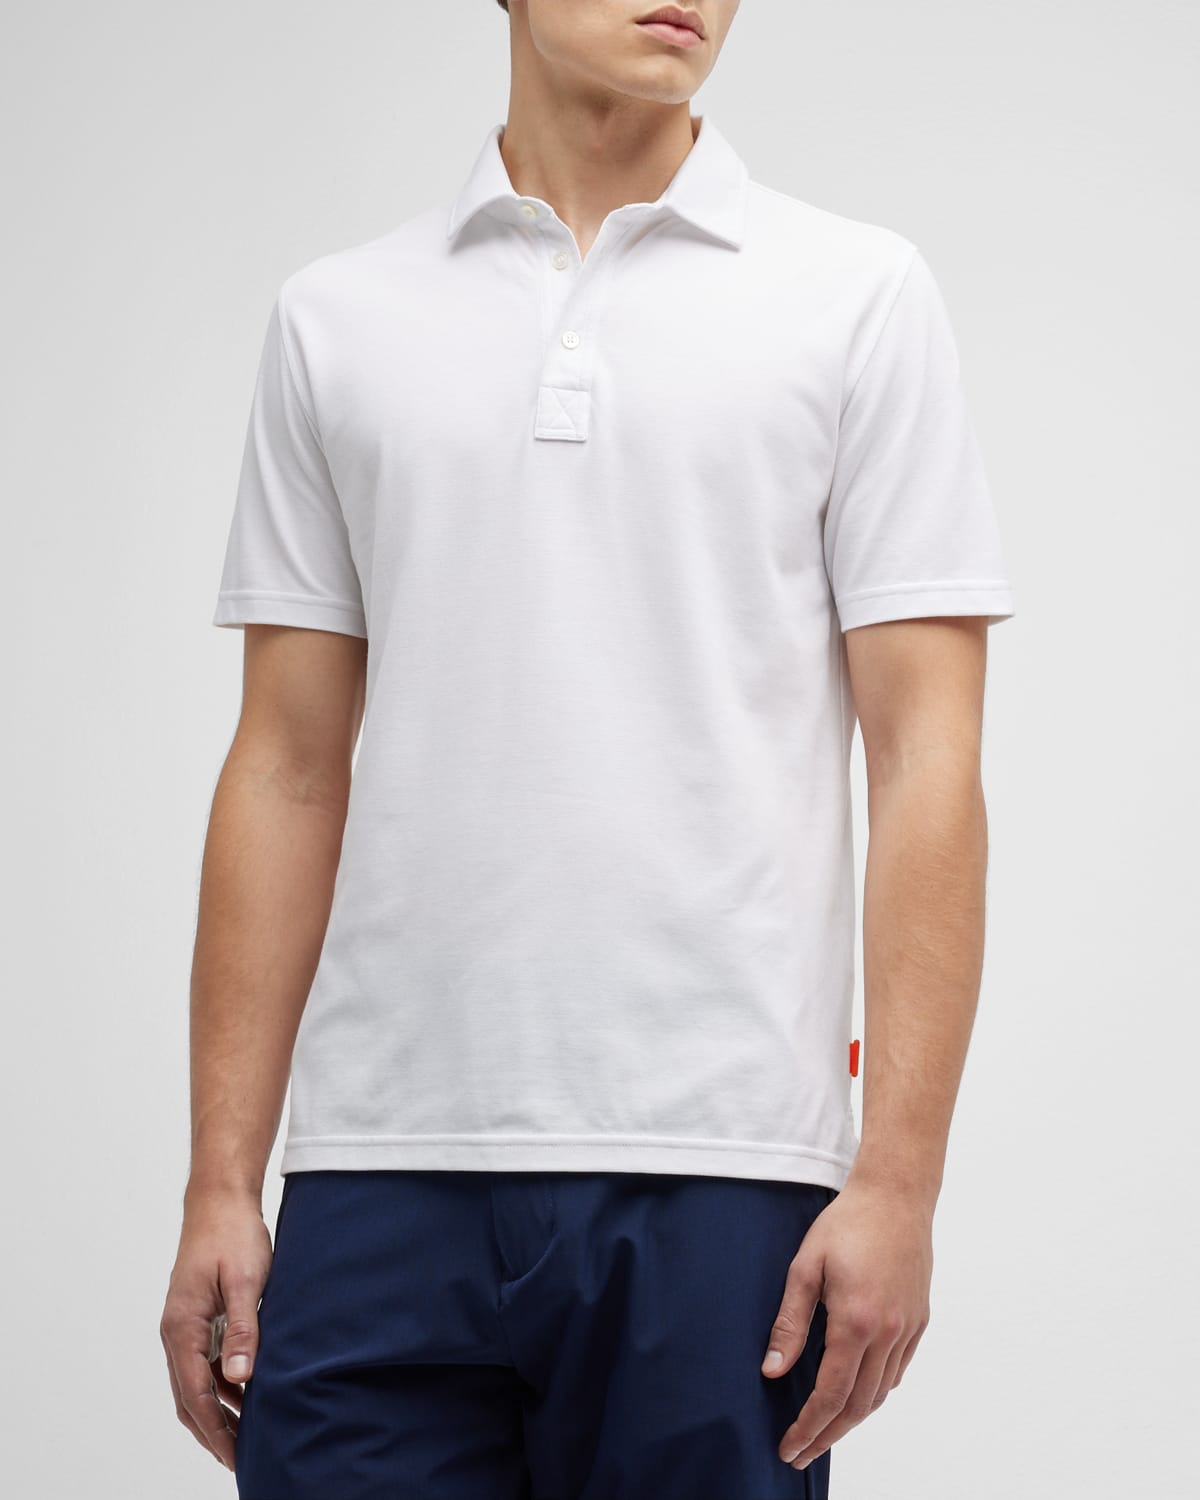 Swims Men's Marina Polo Shirt In White